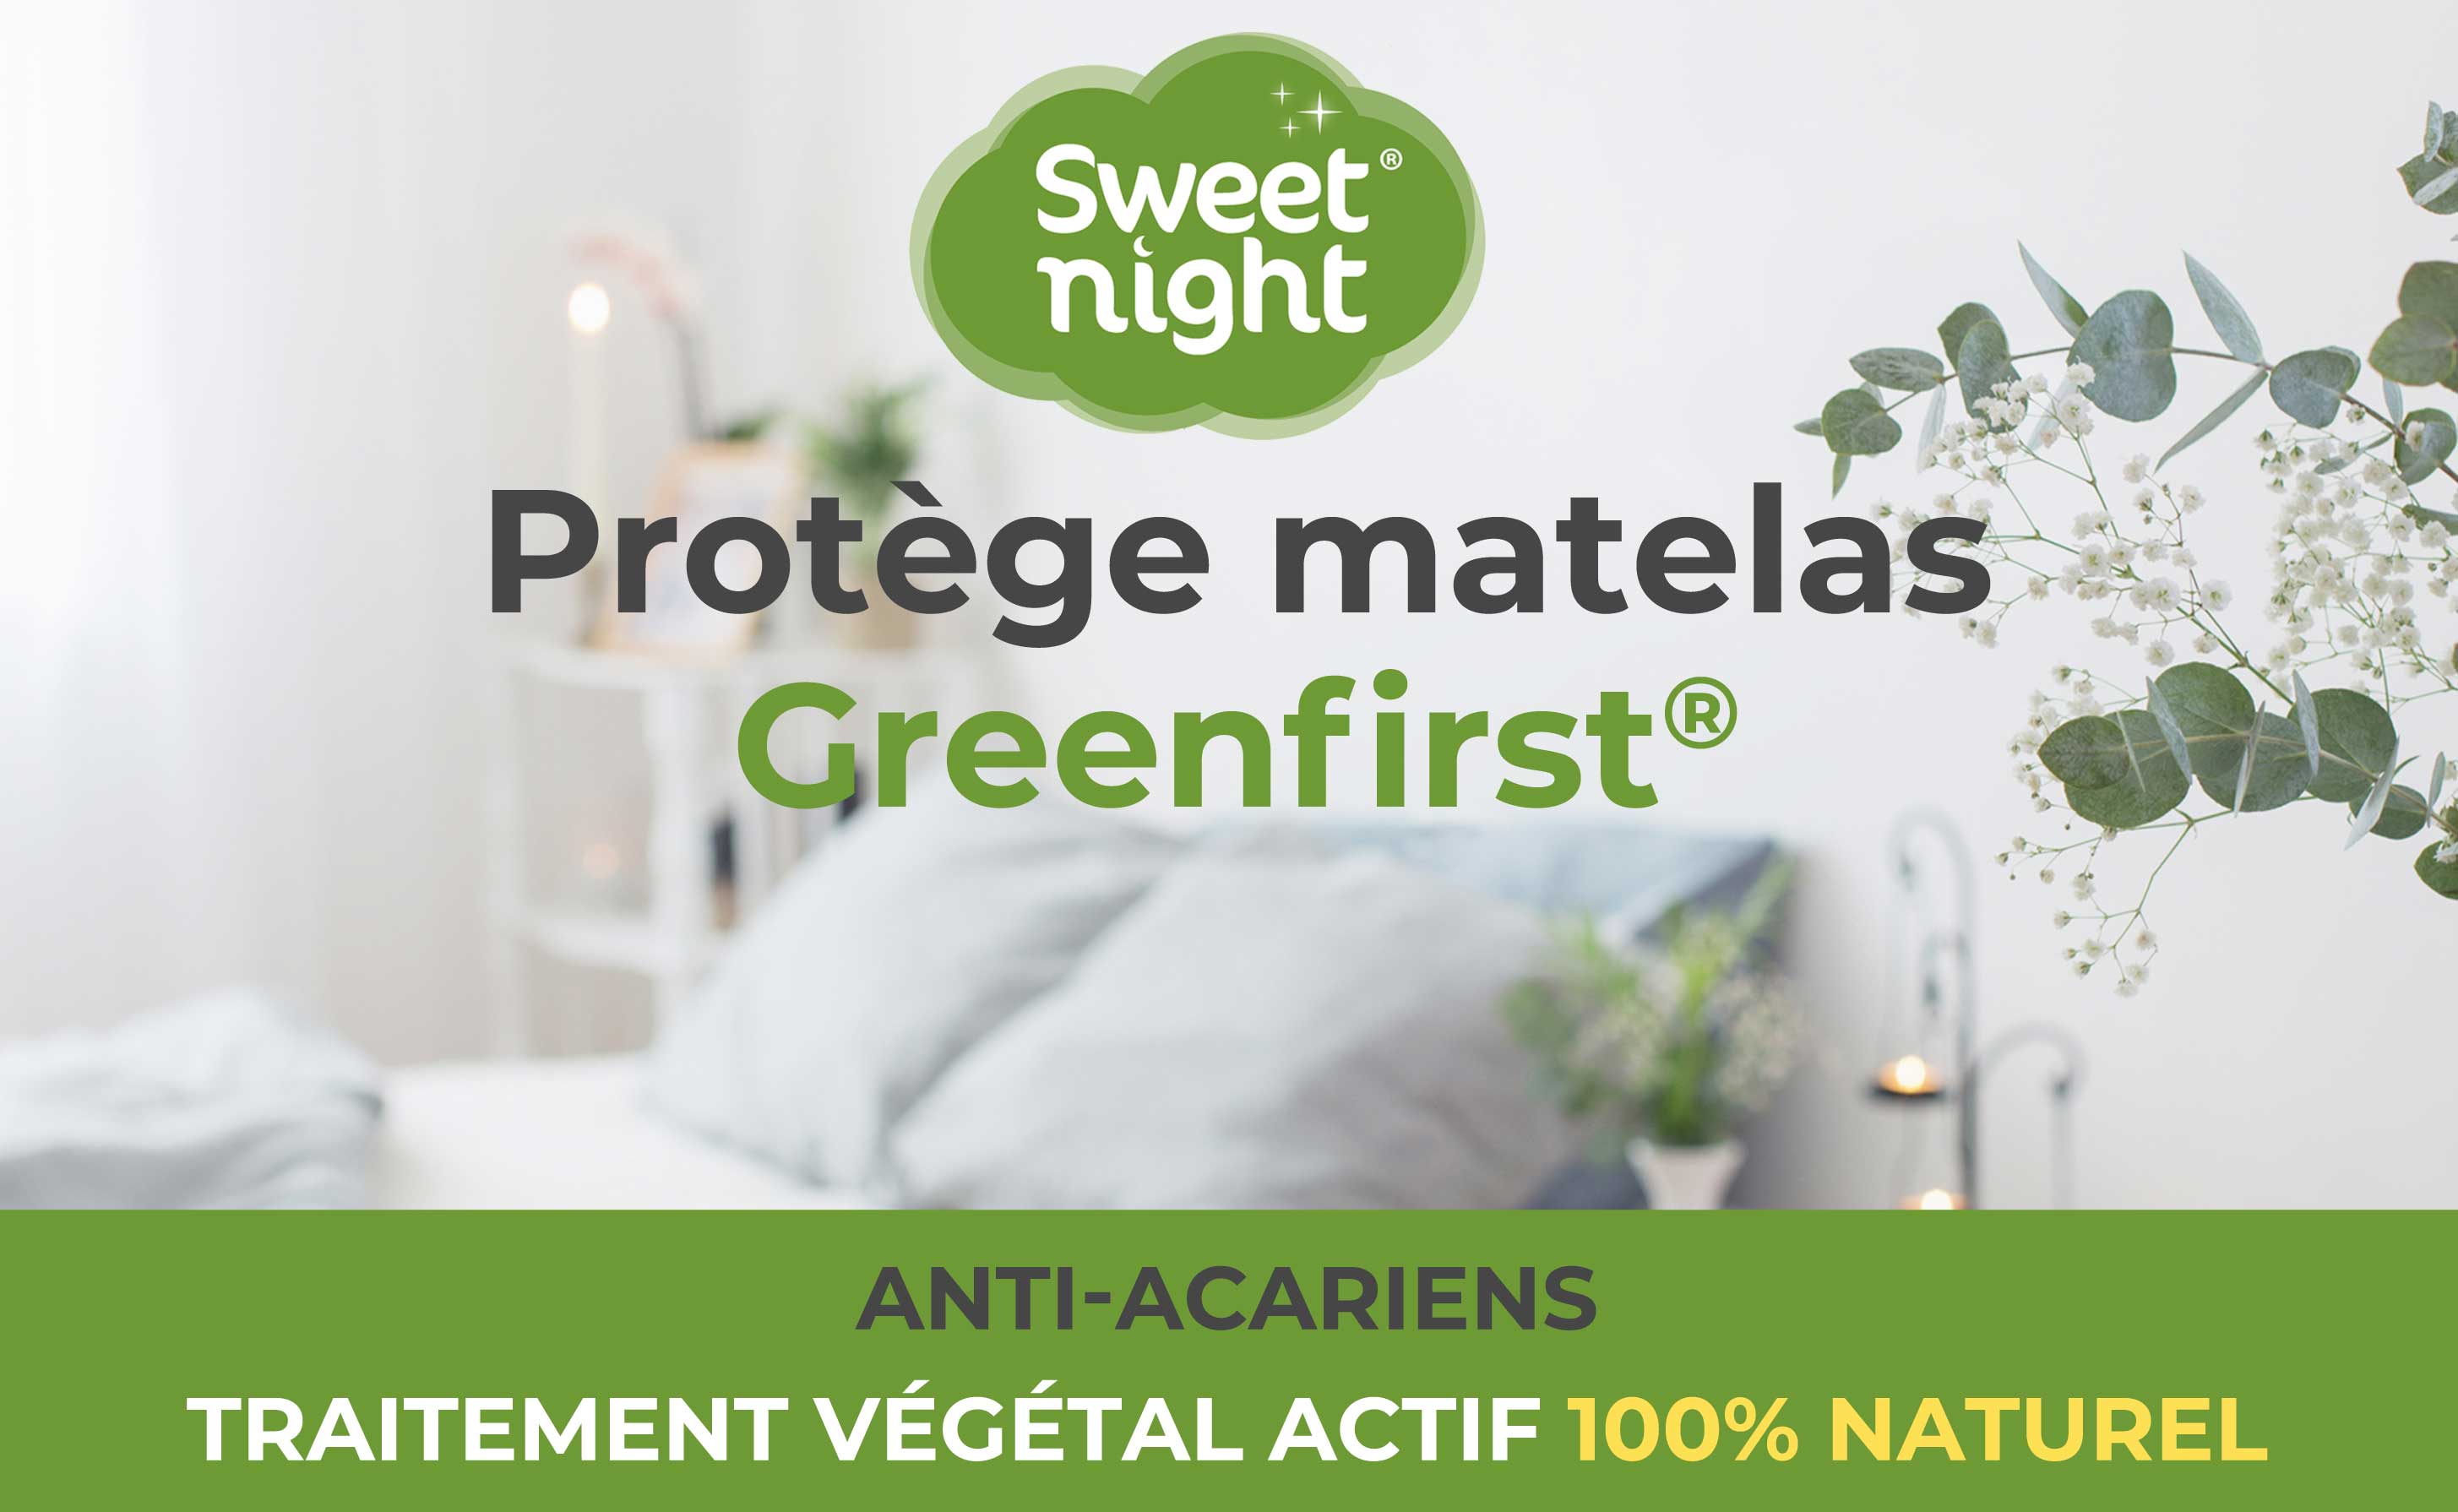 Protege-matelas 140x190cm greenfirst traite anti-acariens - Super